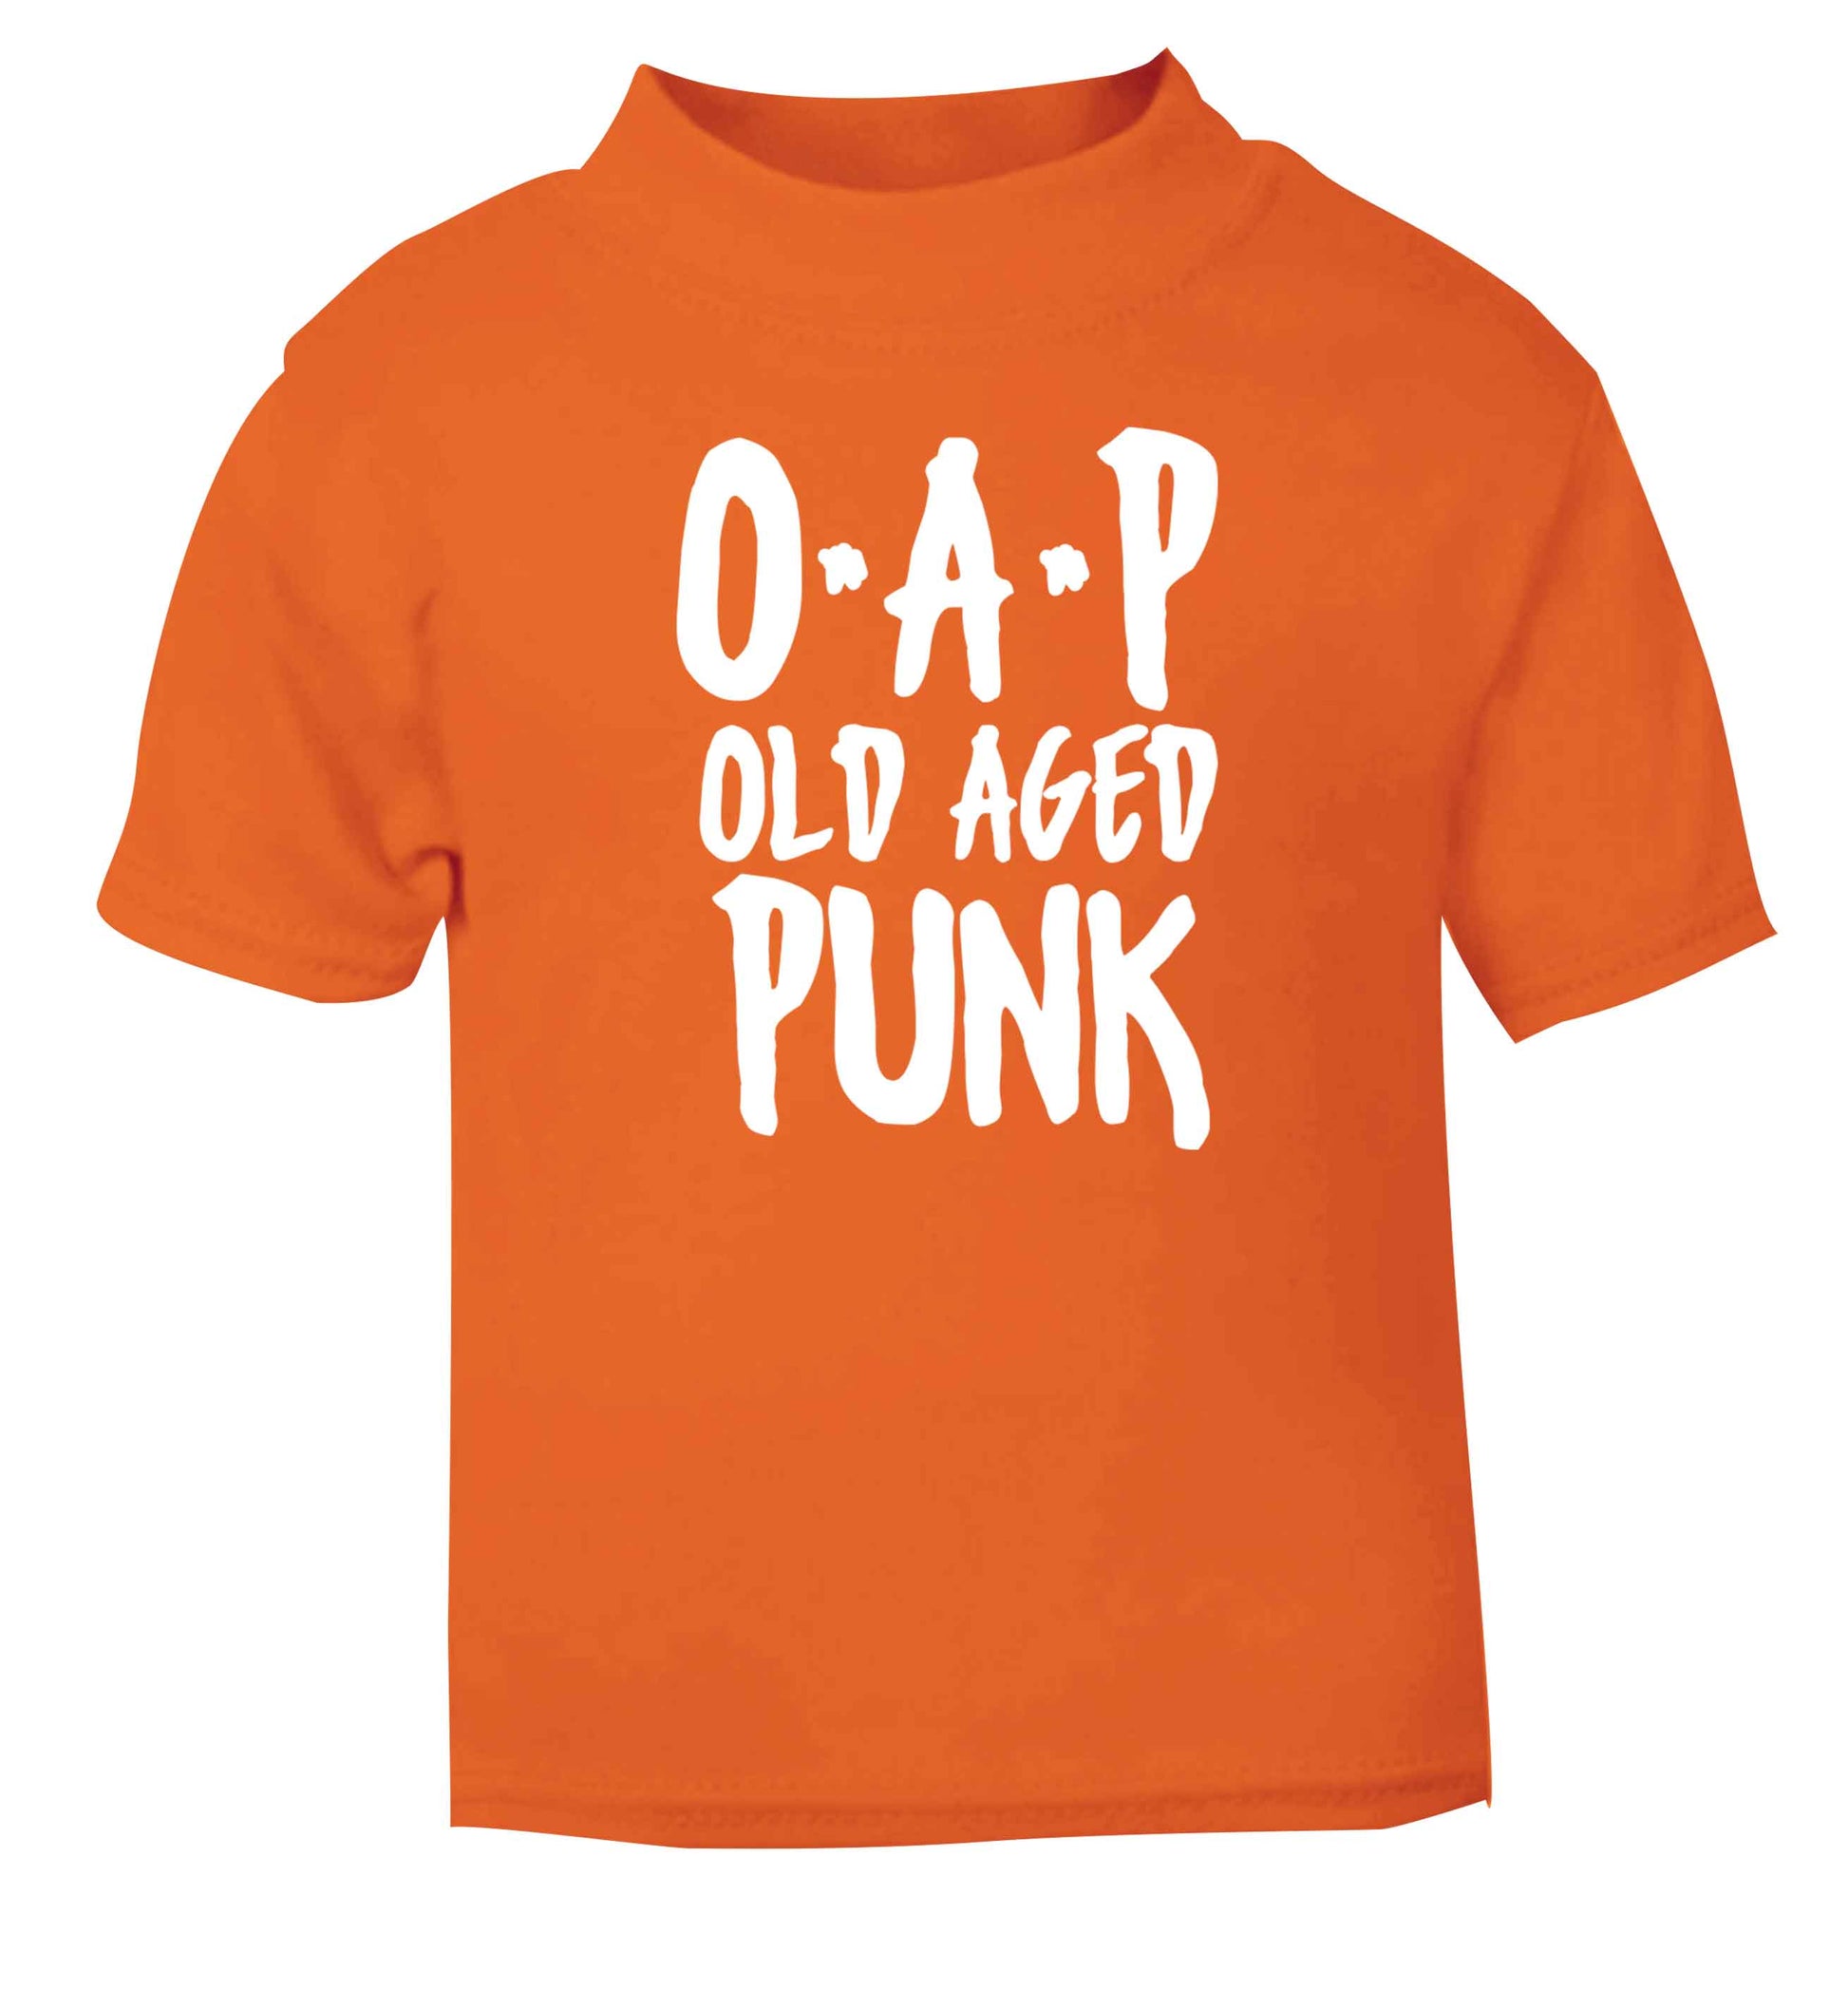 O.A.P Old Age Punk orange Baby Toddler Tshirt 2 Years